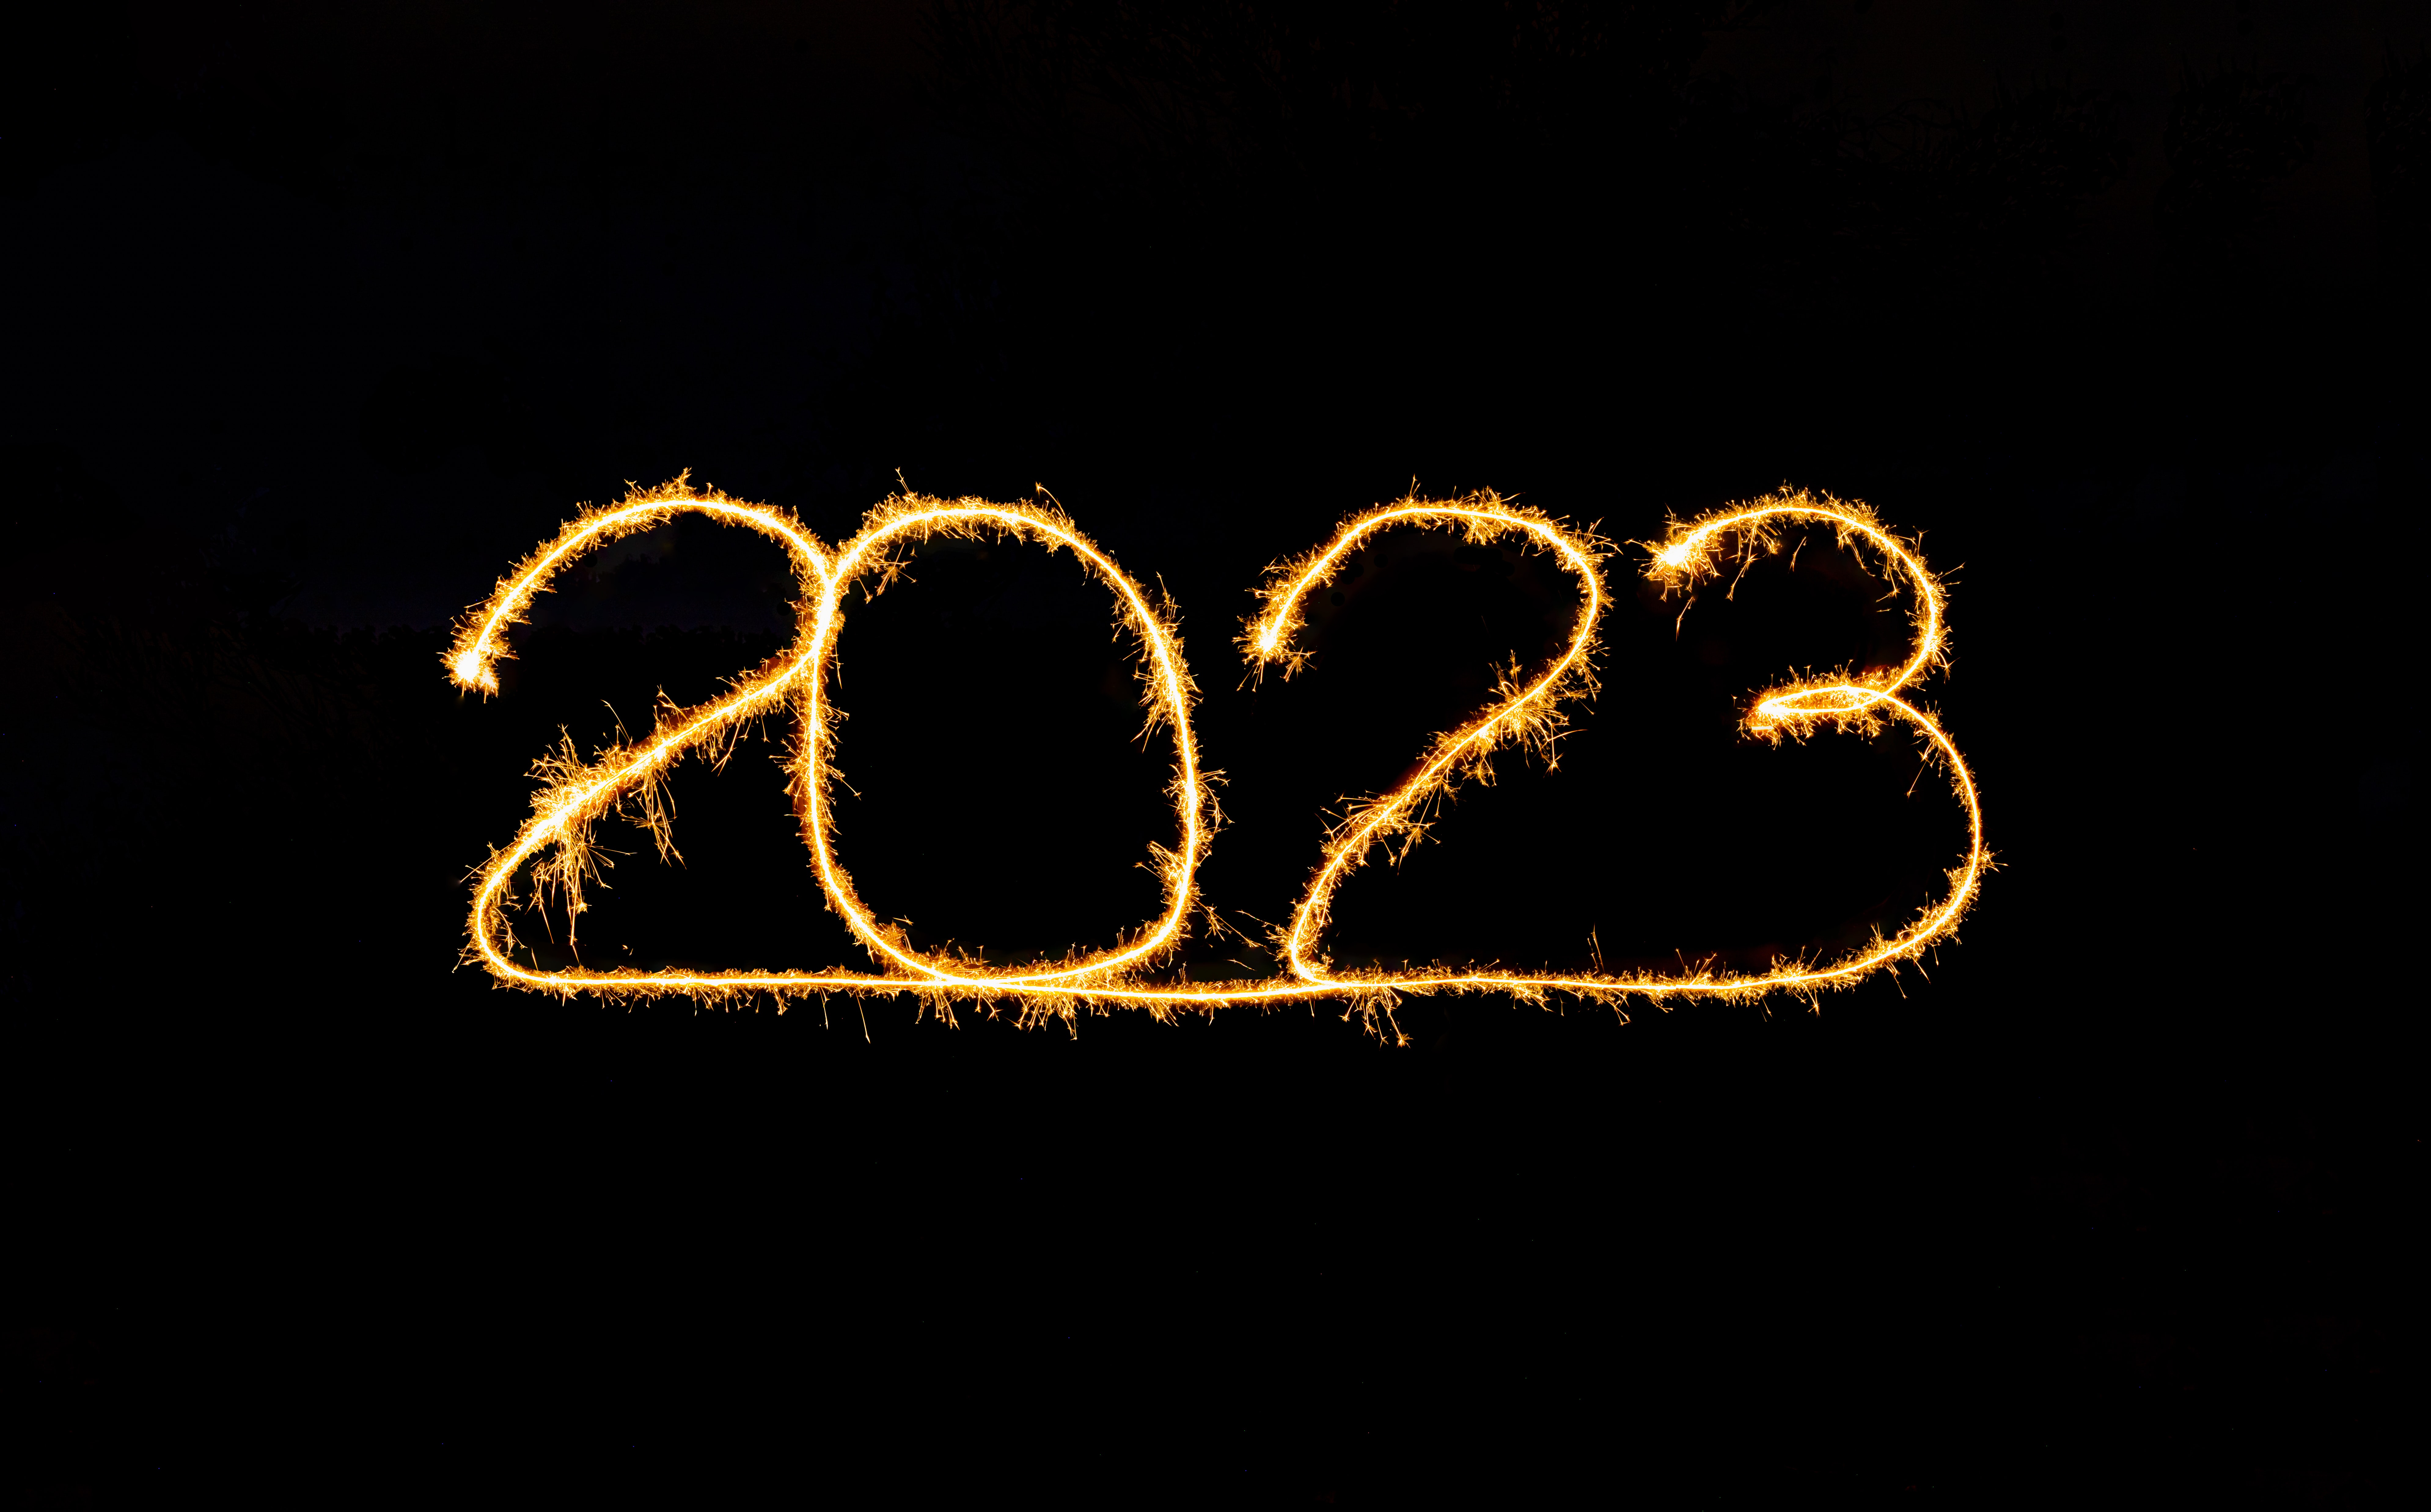 2023 New Year